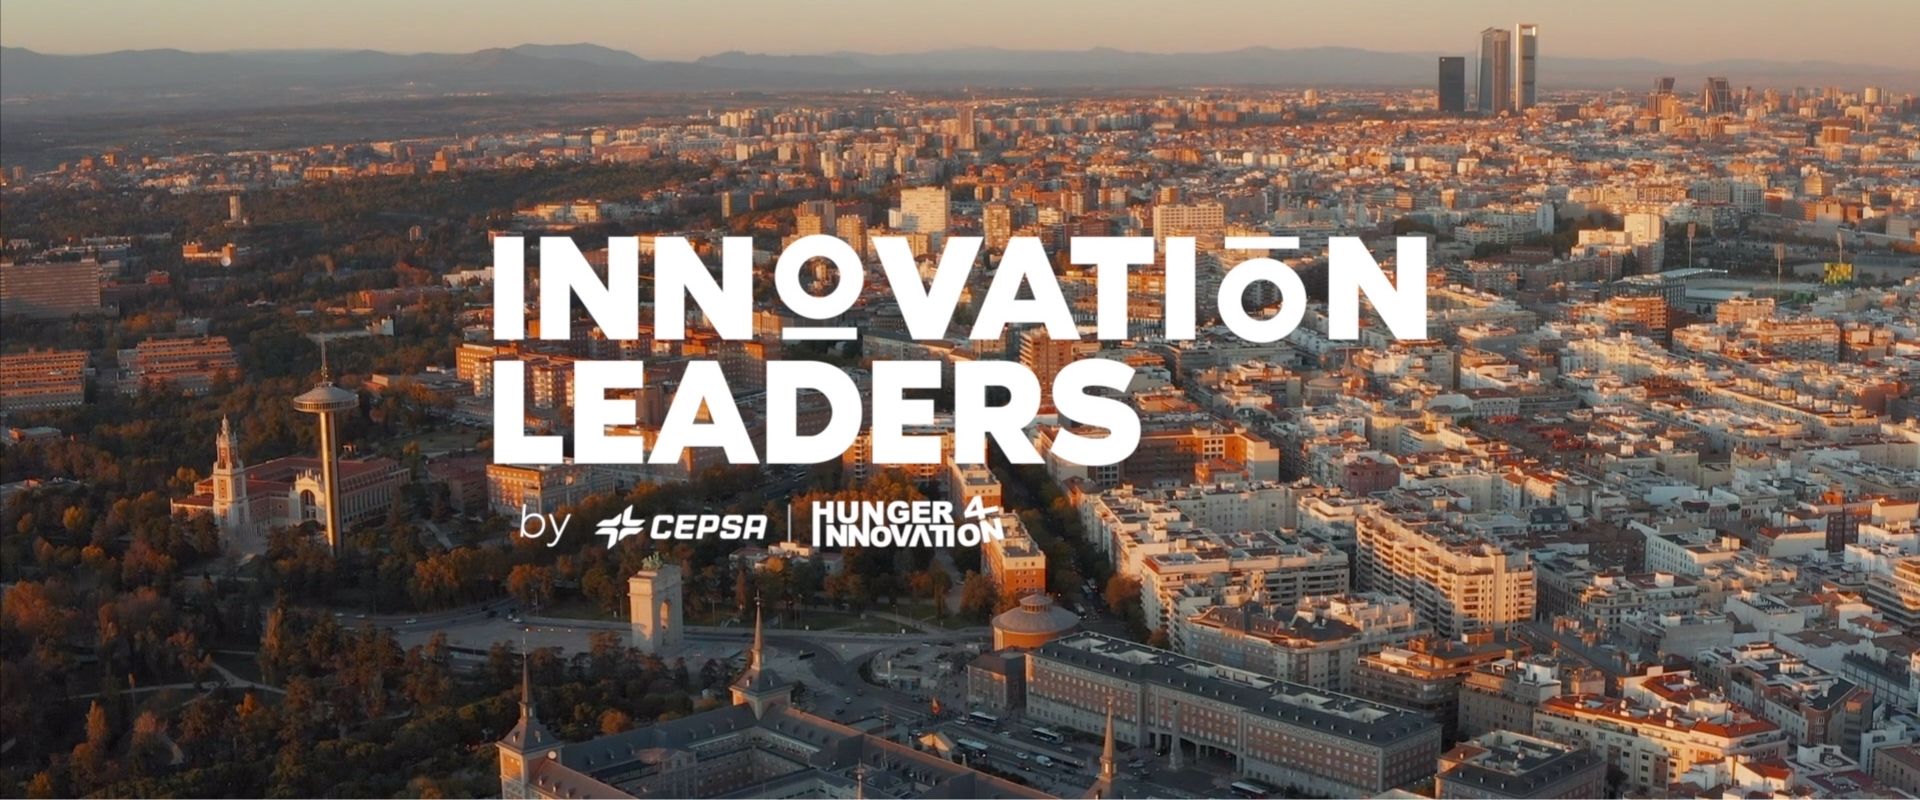 Innovation leaders evento emprendedores cepsa hunger4innovation